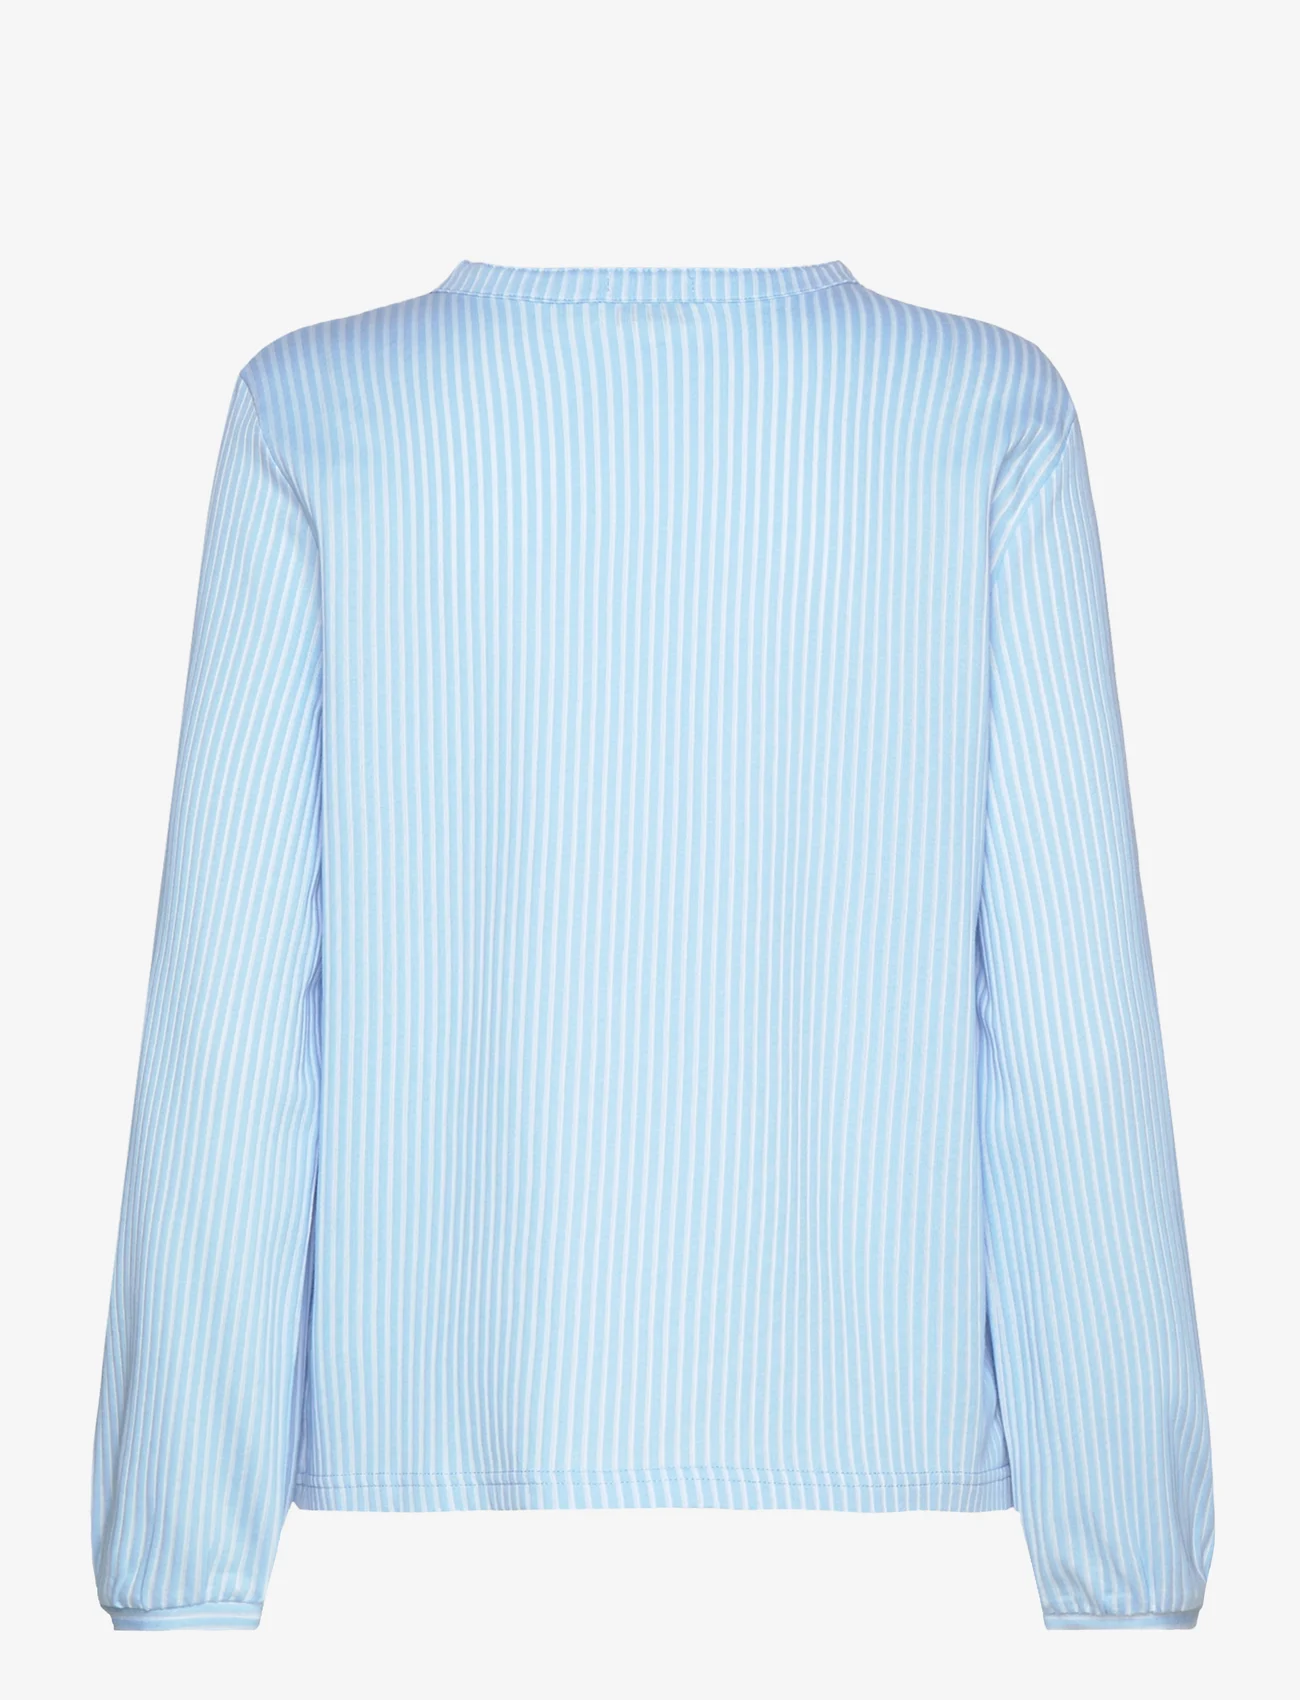 Tom Tailor - T-shirt blouse vertical stripe - langærmede bluser - blue white thin stripe - 1